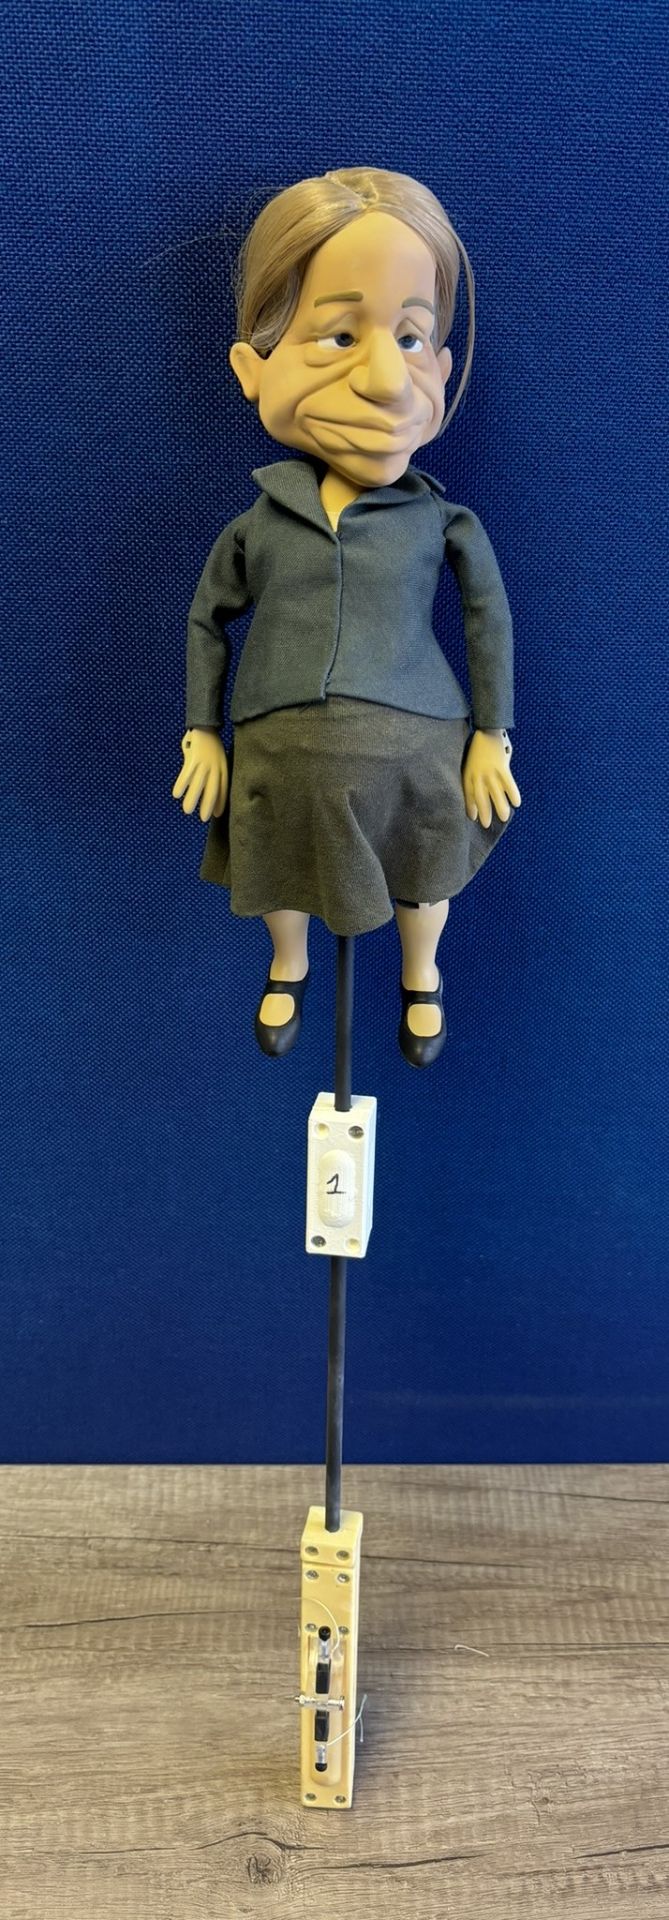 Newzoid puppet - Natalie Bennett - Image 3 of 3